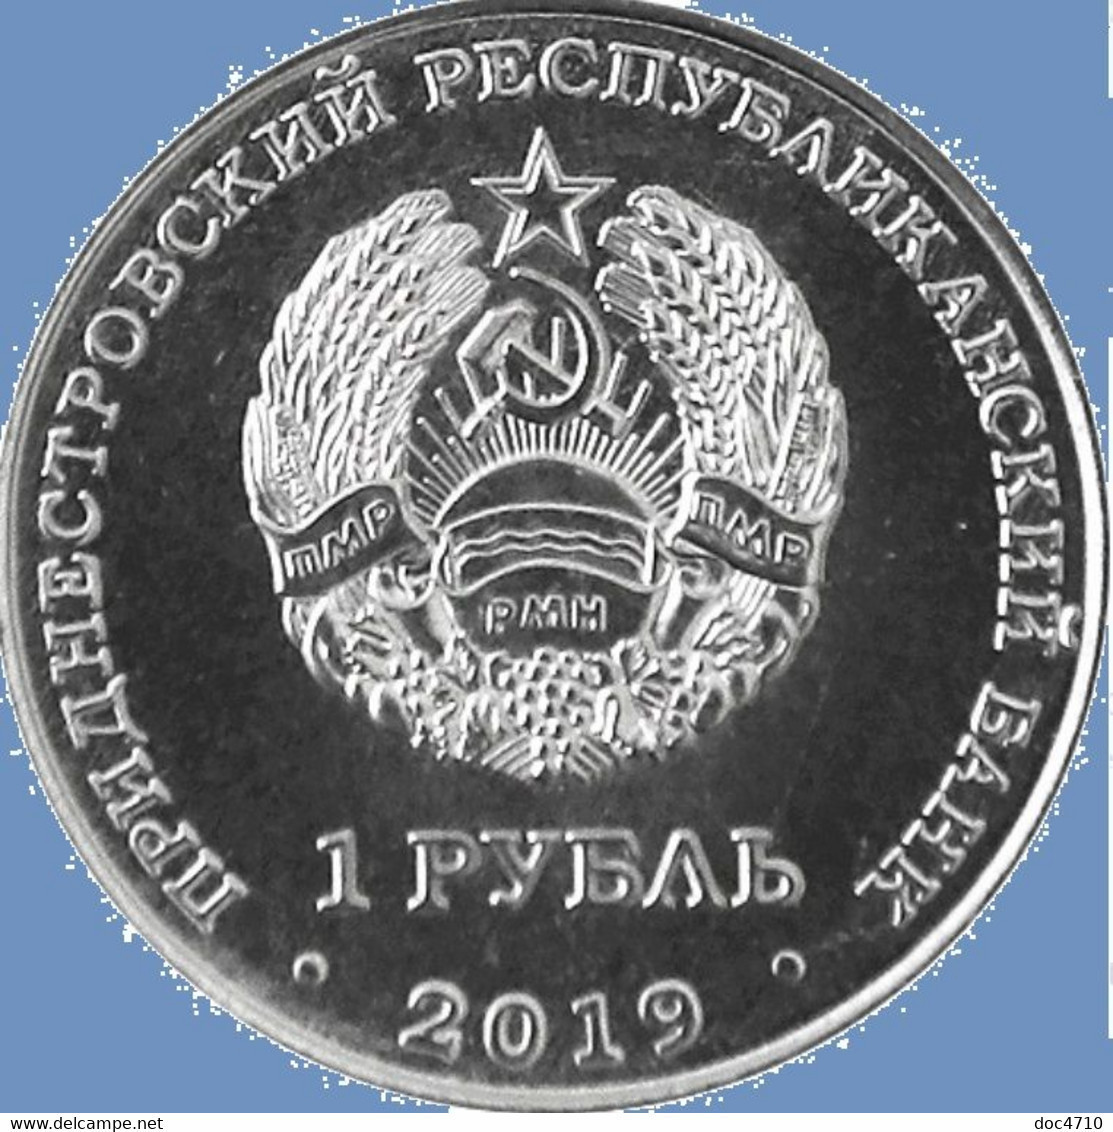 Moldova-Transnistria 1 Ruble 2019, Chinese Zodiac Series - Year Of The Metal Rat 2020, KM#New, Unc - Moldavia